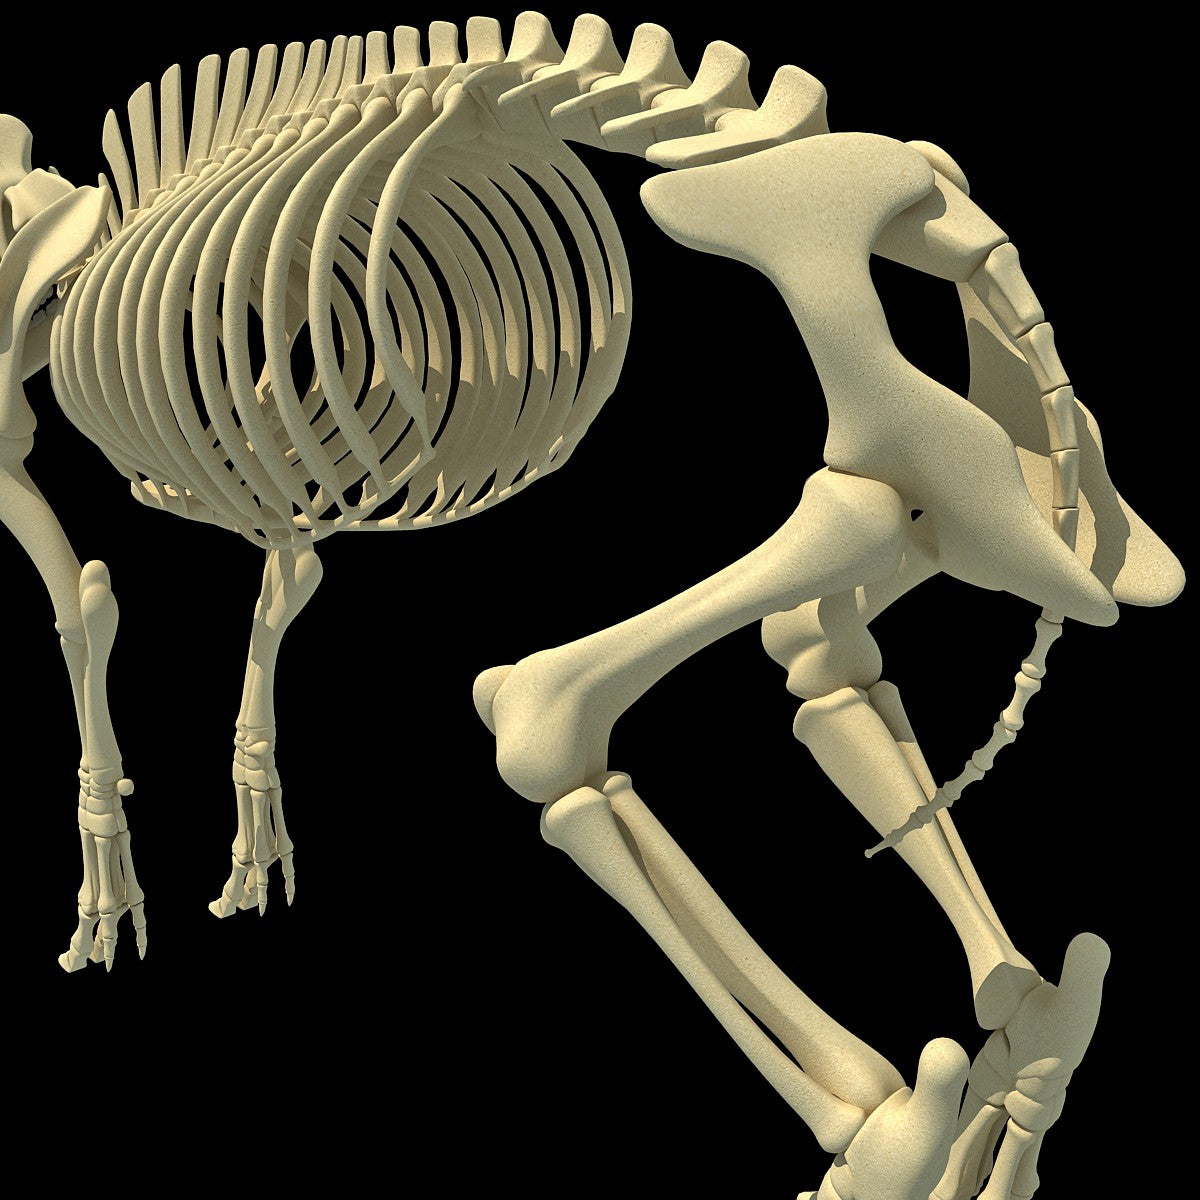 Pig Skeleton